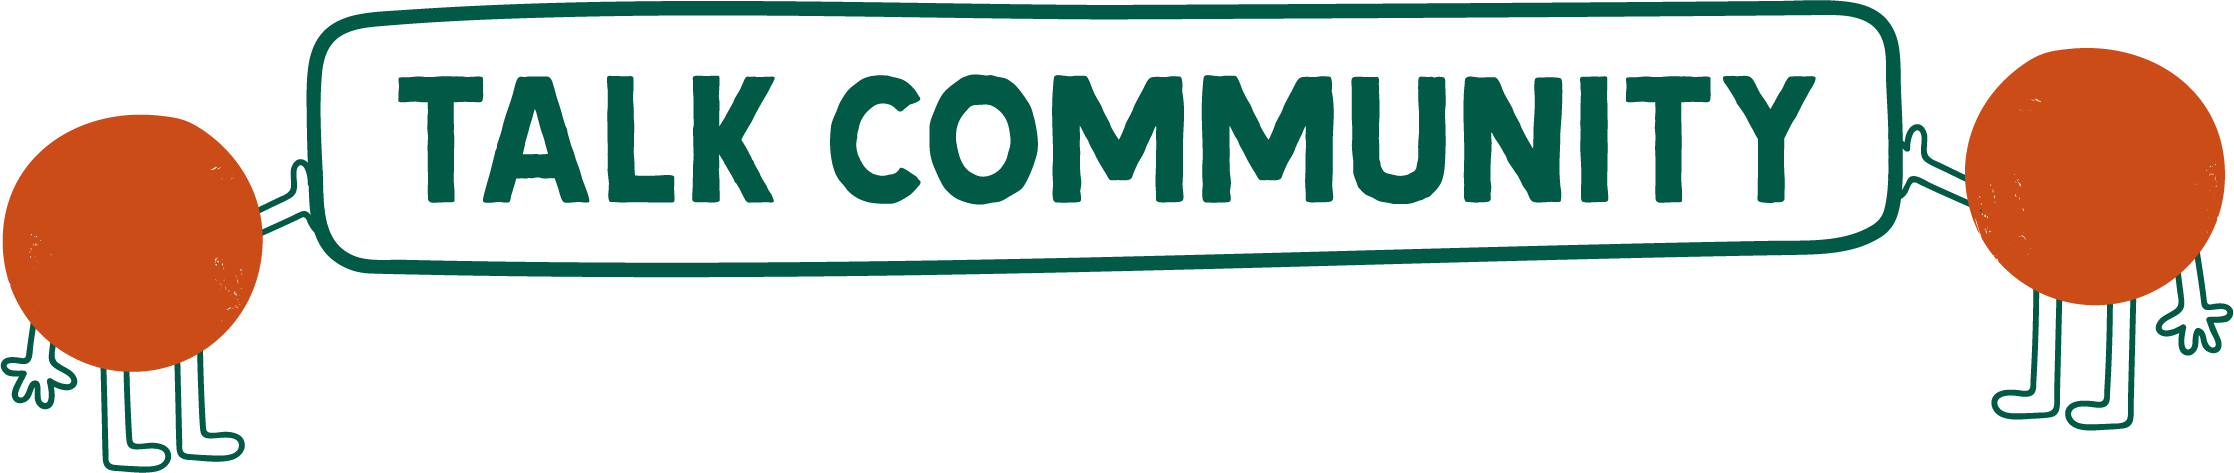 Talk Community logo